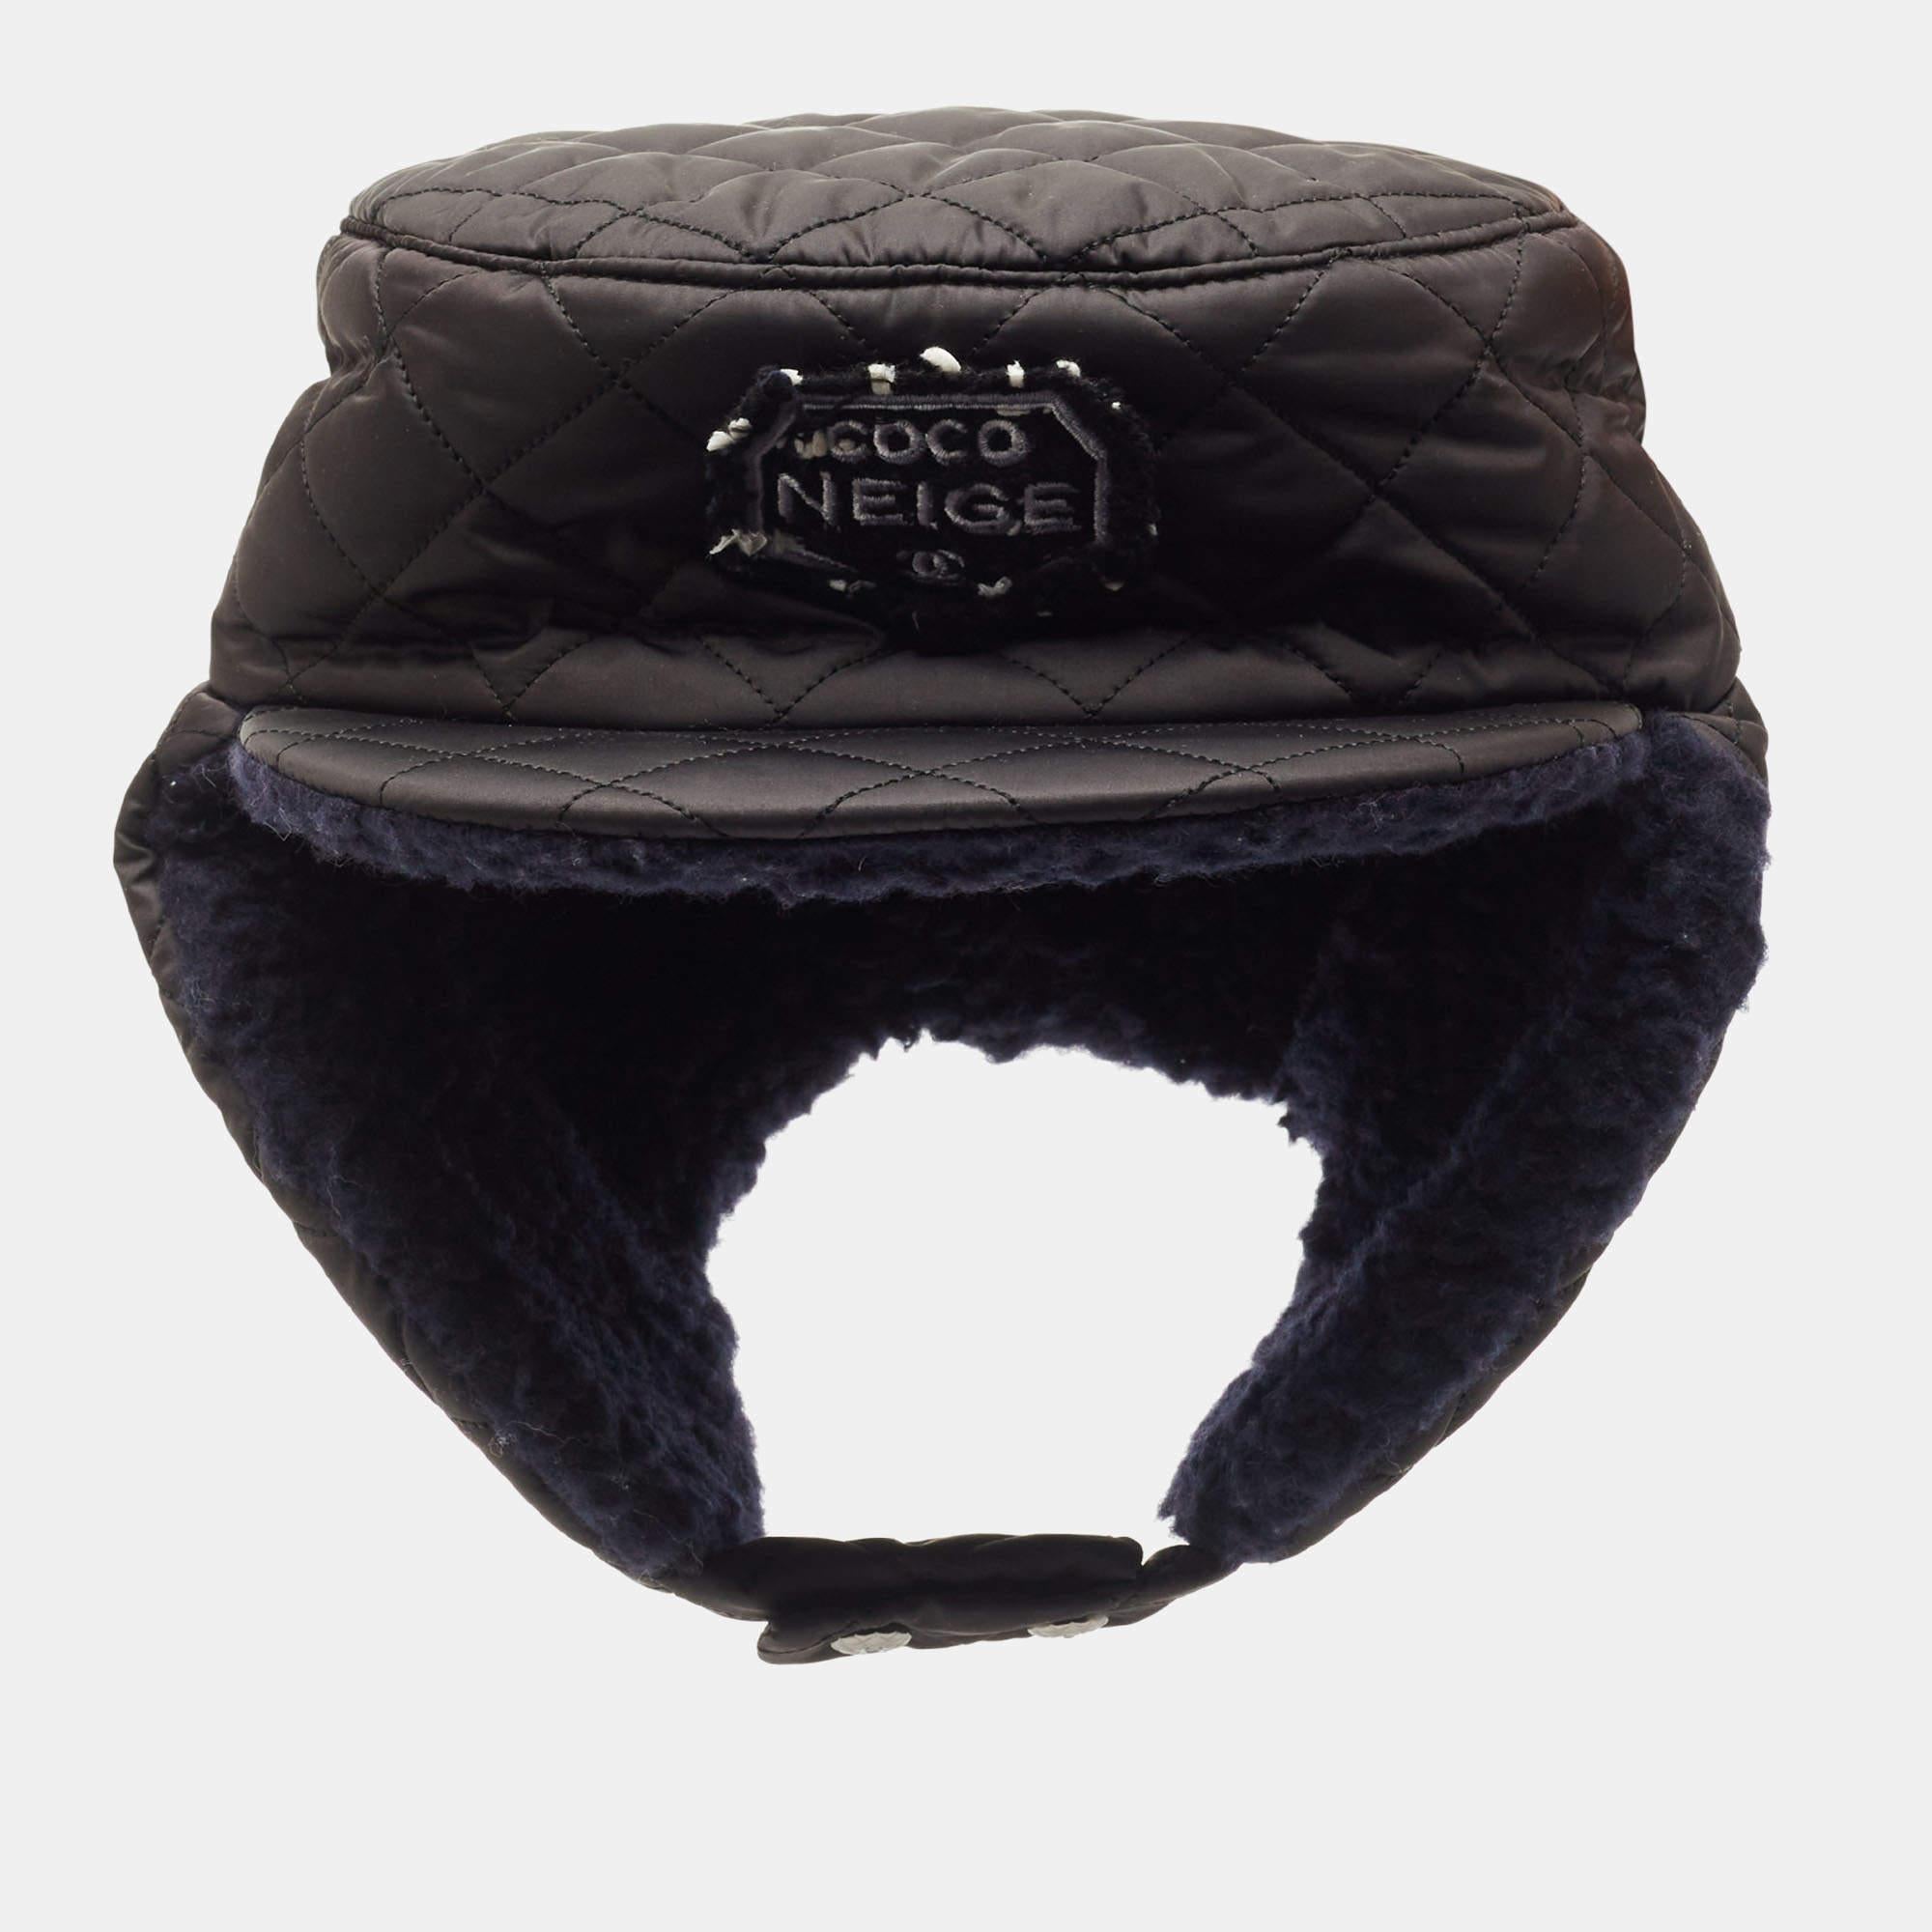 Chanel Black Quilted Coco Neige Trapper Hat M In Good Condition For Sale In Dubai, Al Qouz 2